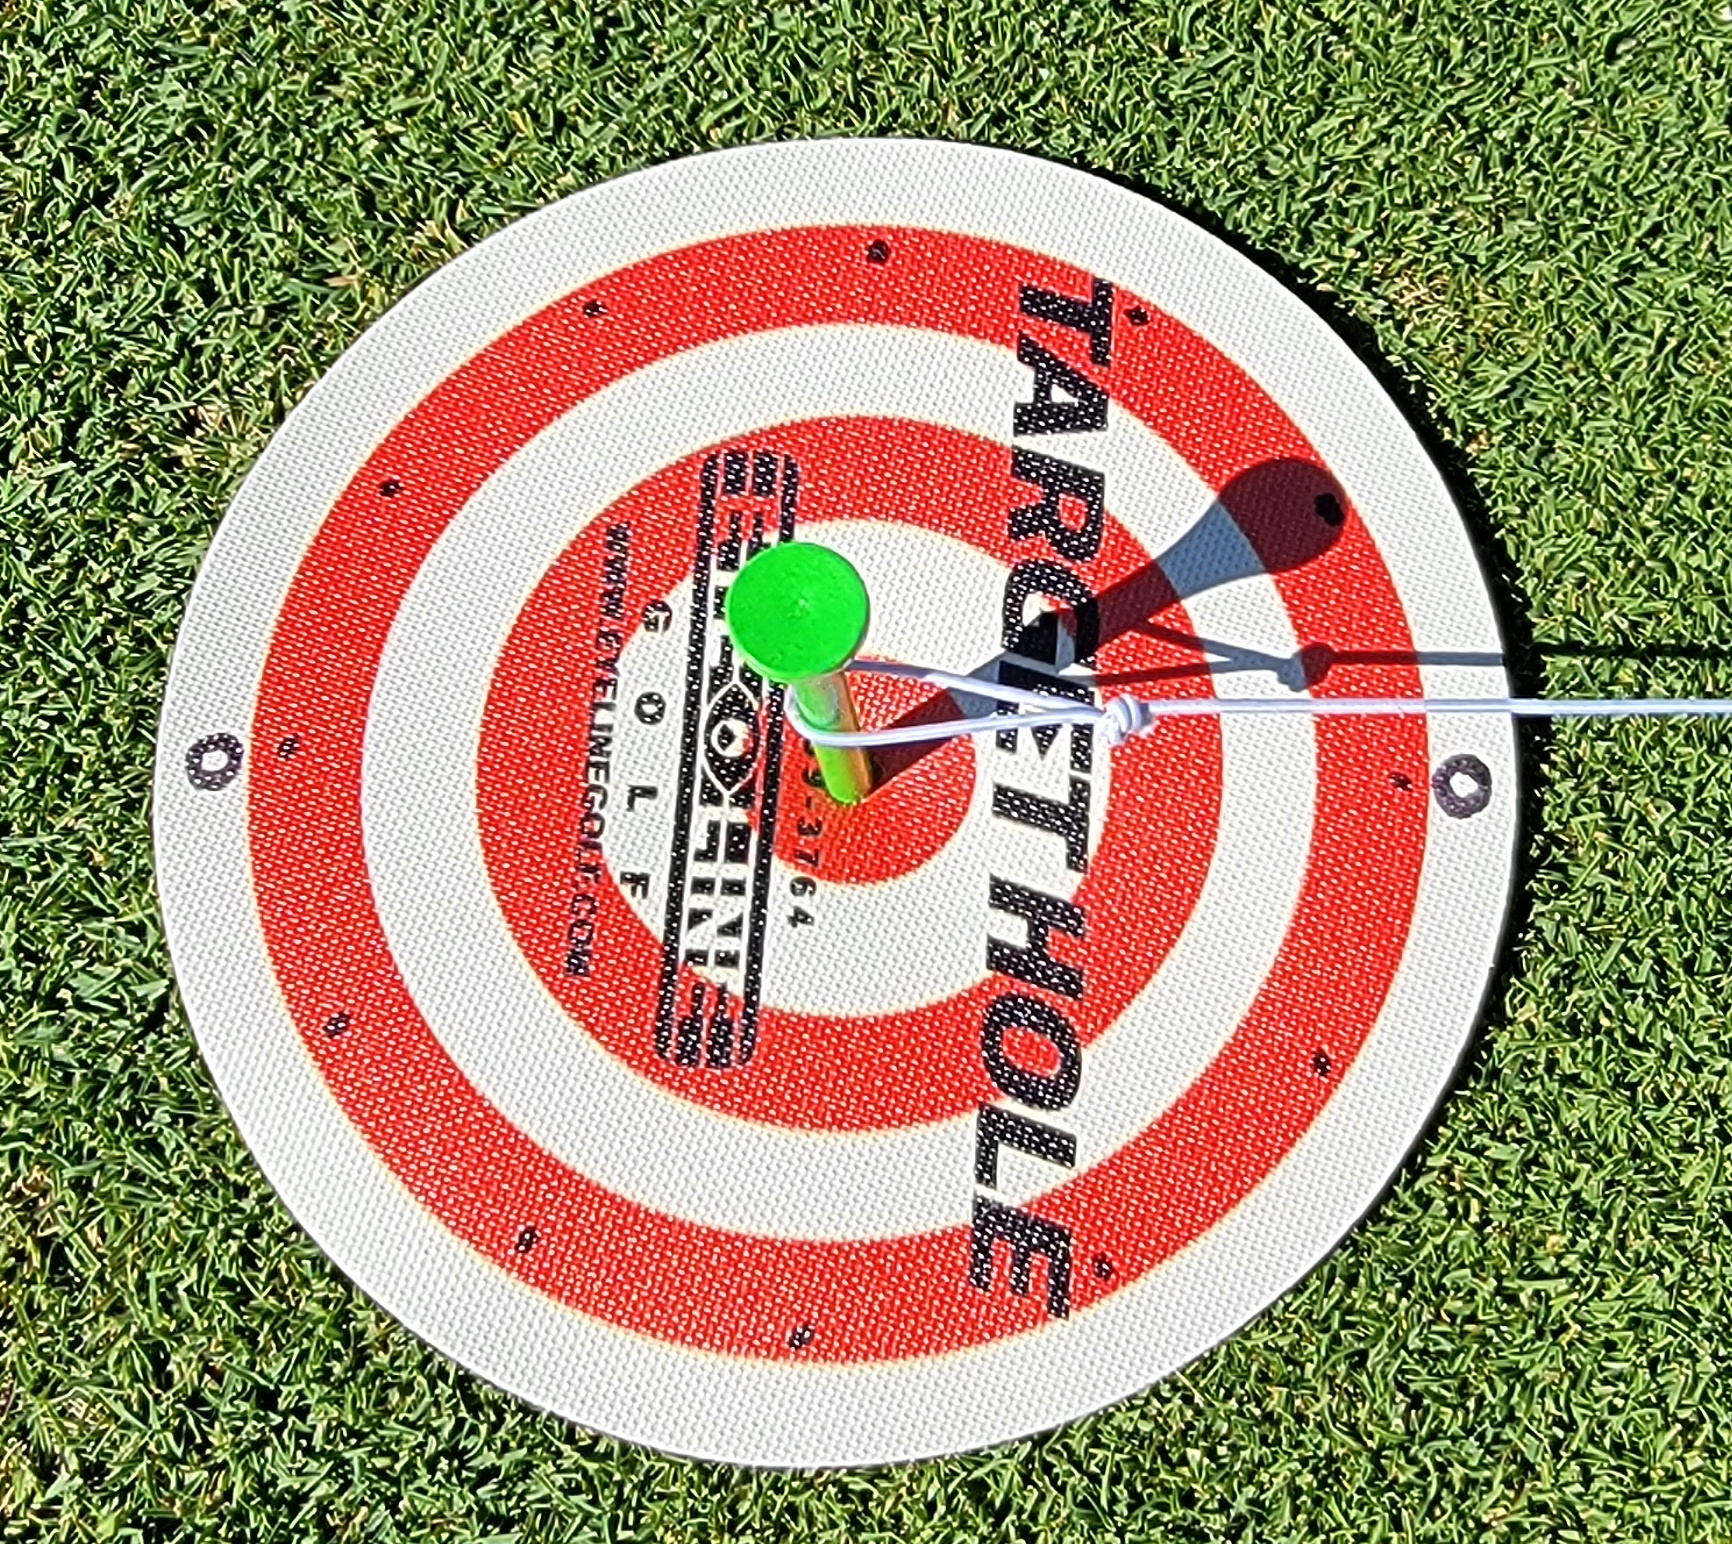 Old Duffer Golf image of target hole for golf drills setup